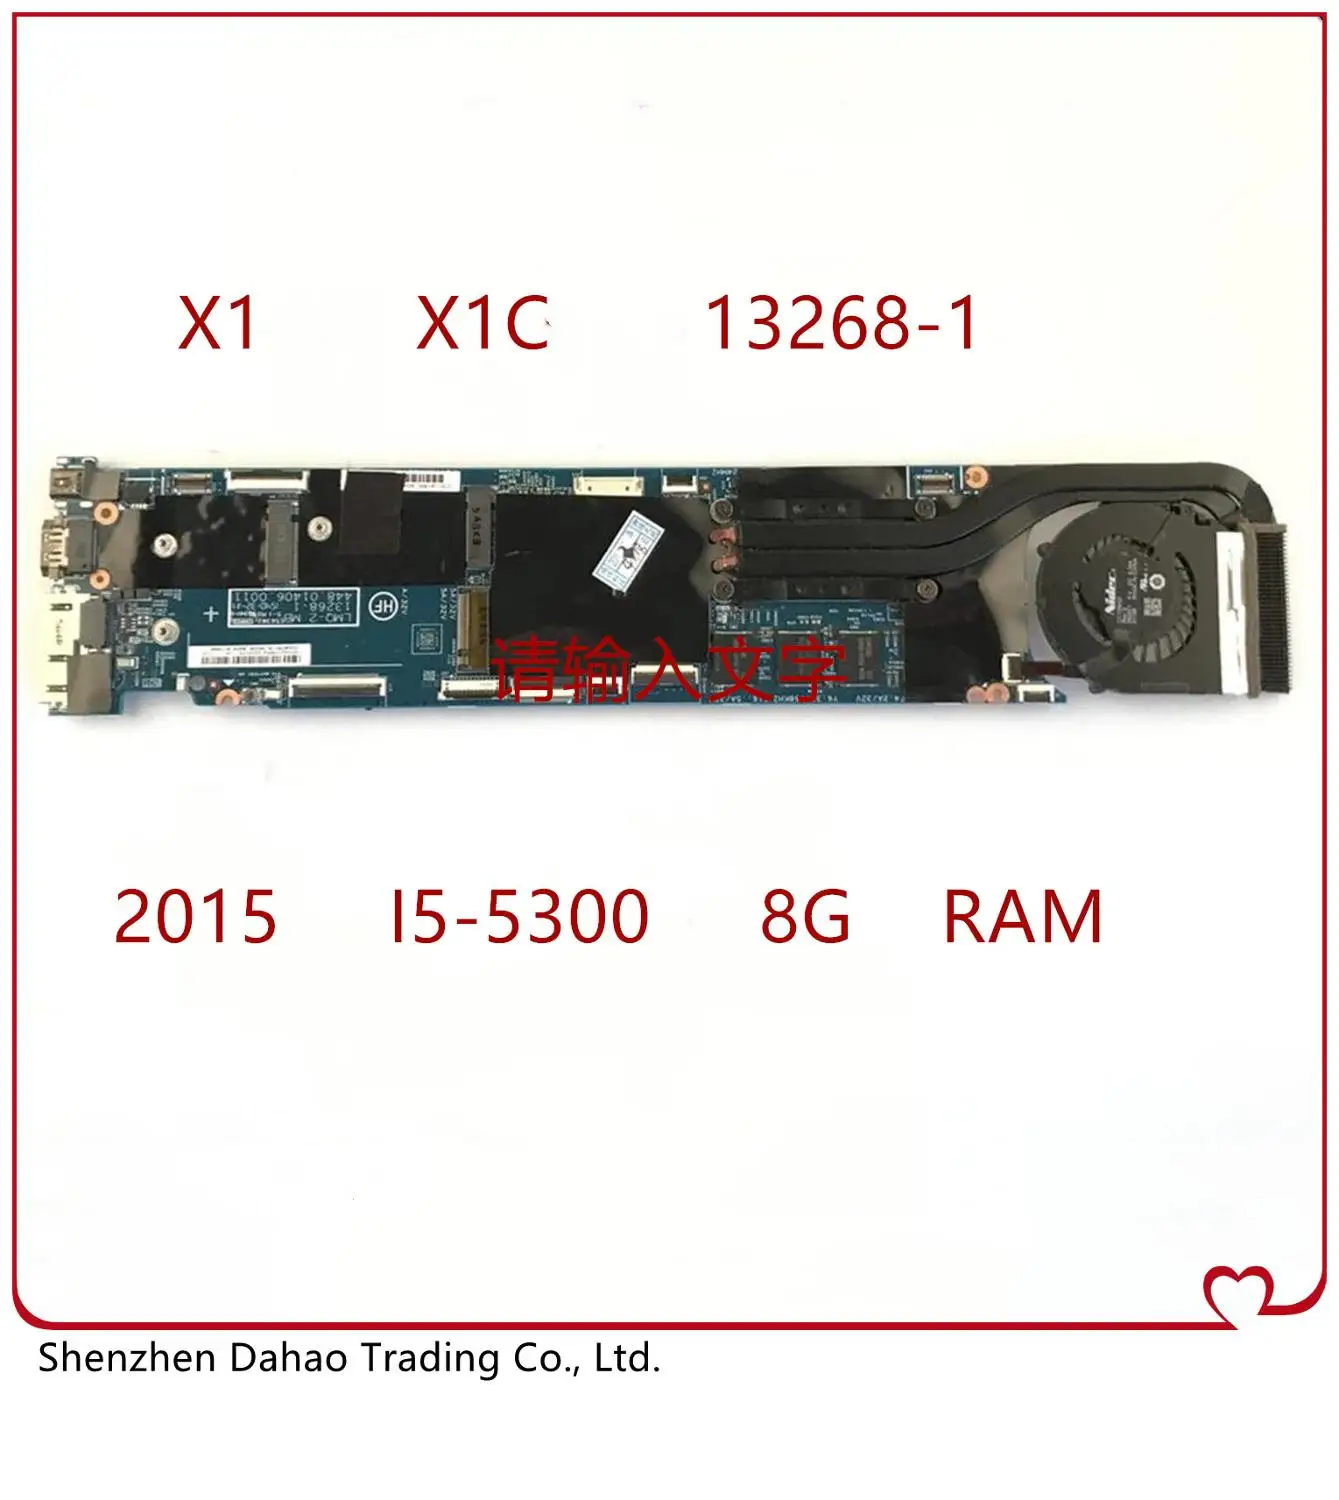 

00HT359 For lenovo thinkpad X1 Carbon x1c laptop motherboard I5-5300U 8G RAM LMQ-2 MB 13268-1 448.01406.0011 mainboard 100% TEST